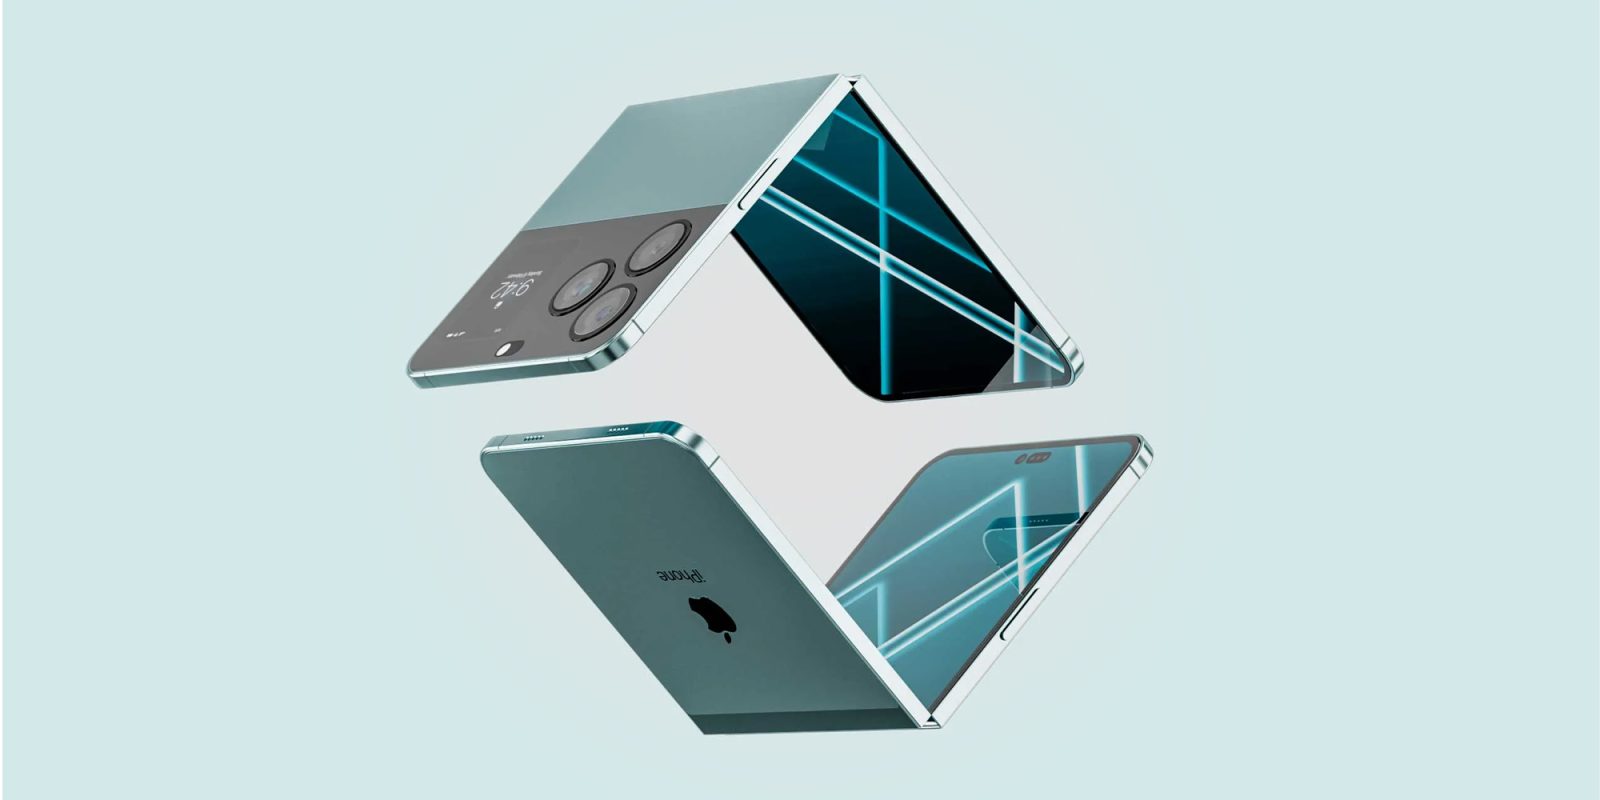 Folding iPhone Flip Phone Concept Imagines Apple Watch-like Secondary Display